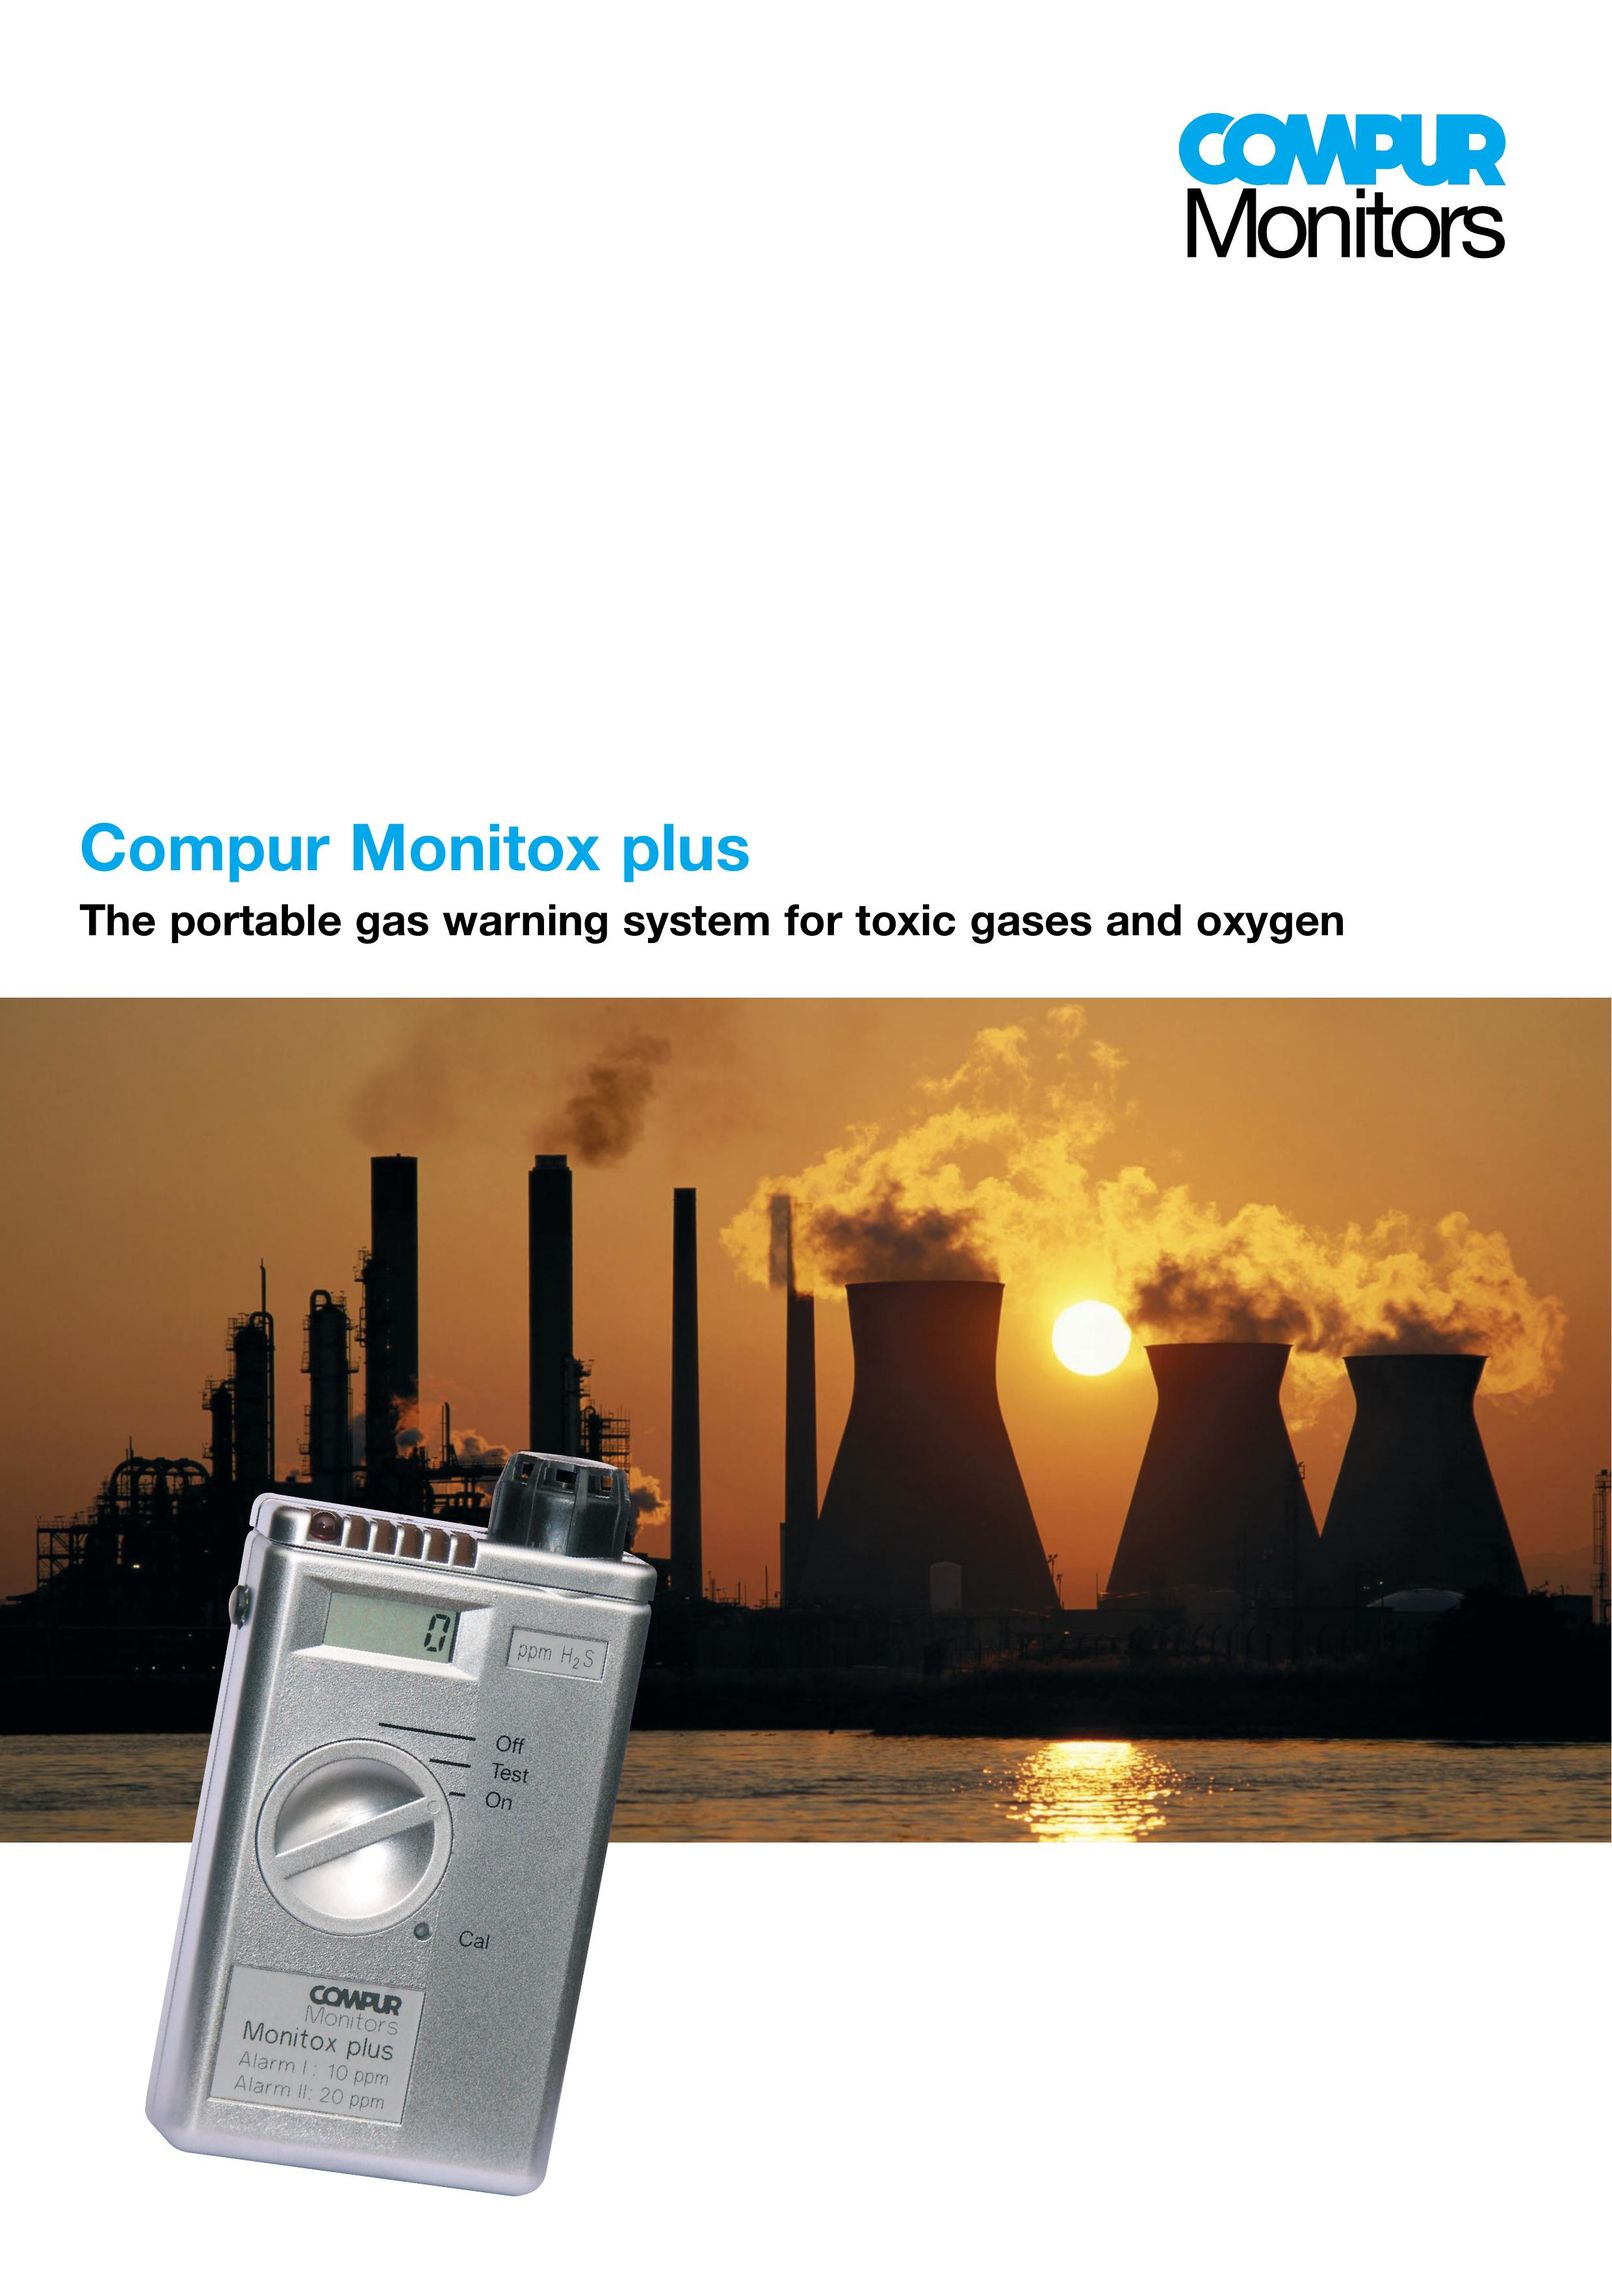 Compur Monitox plus Carbon Monoxide Alarm User Manual